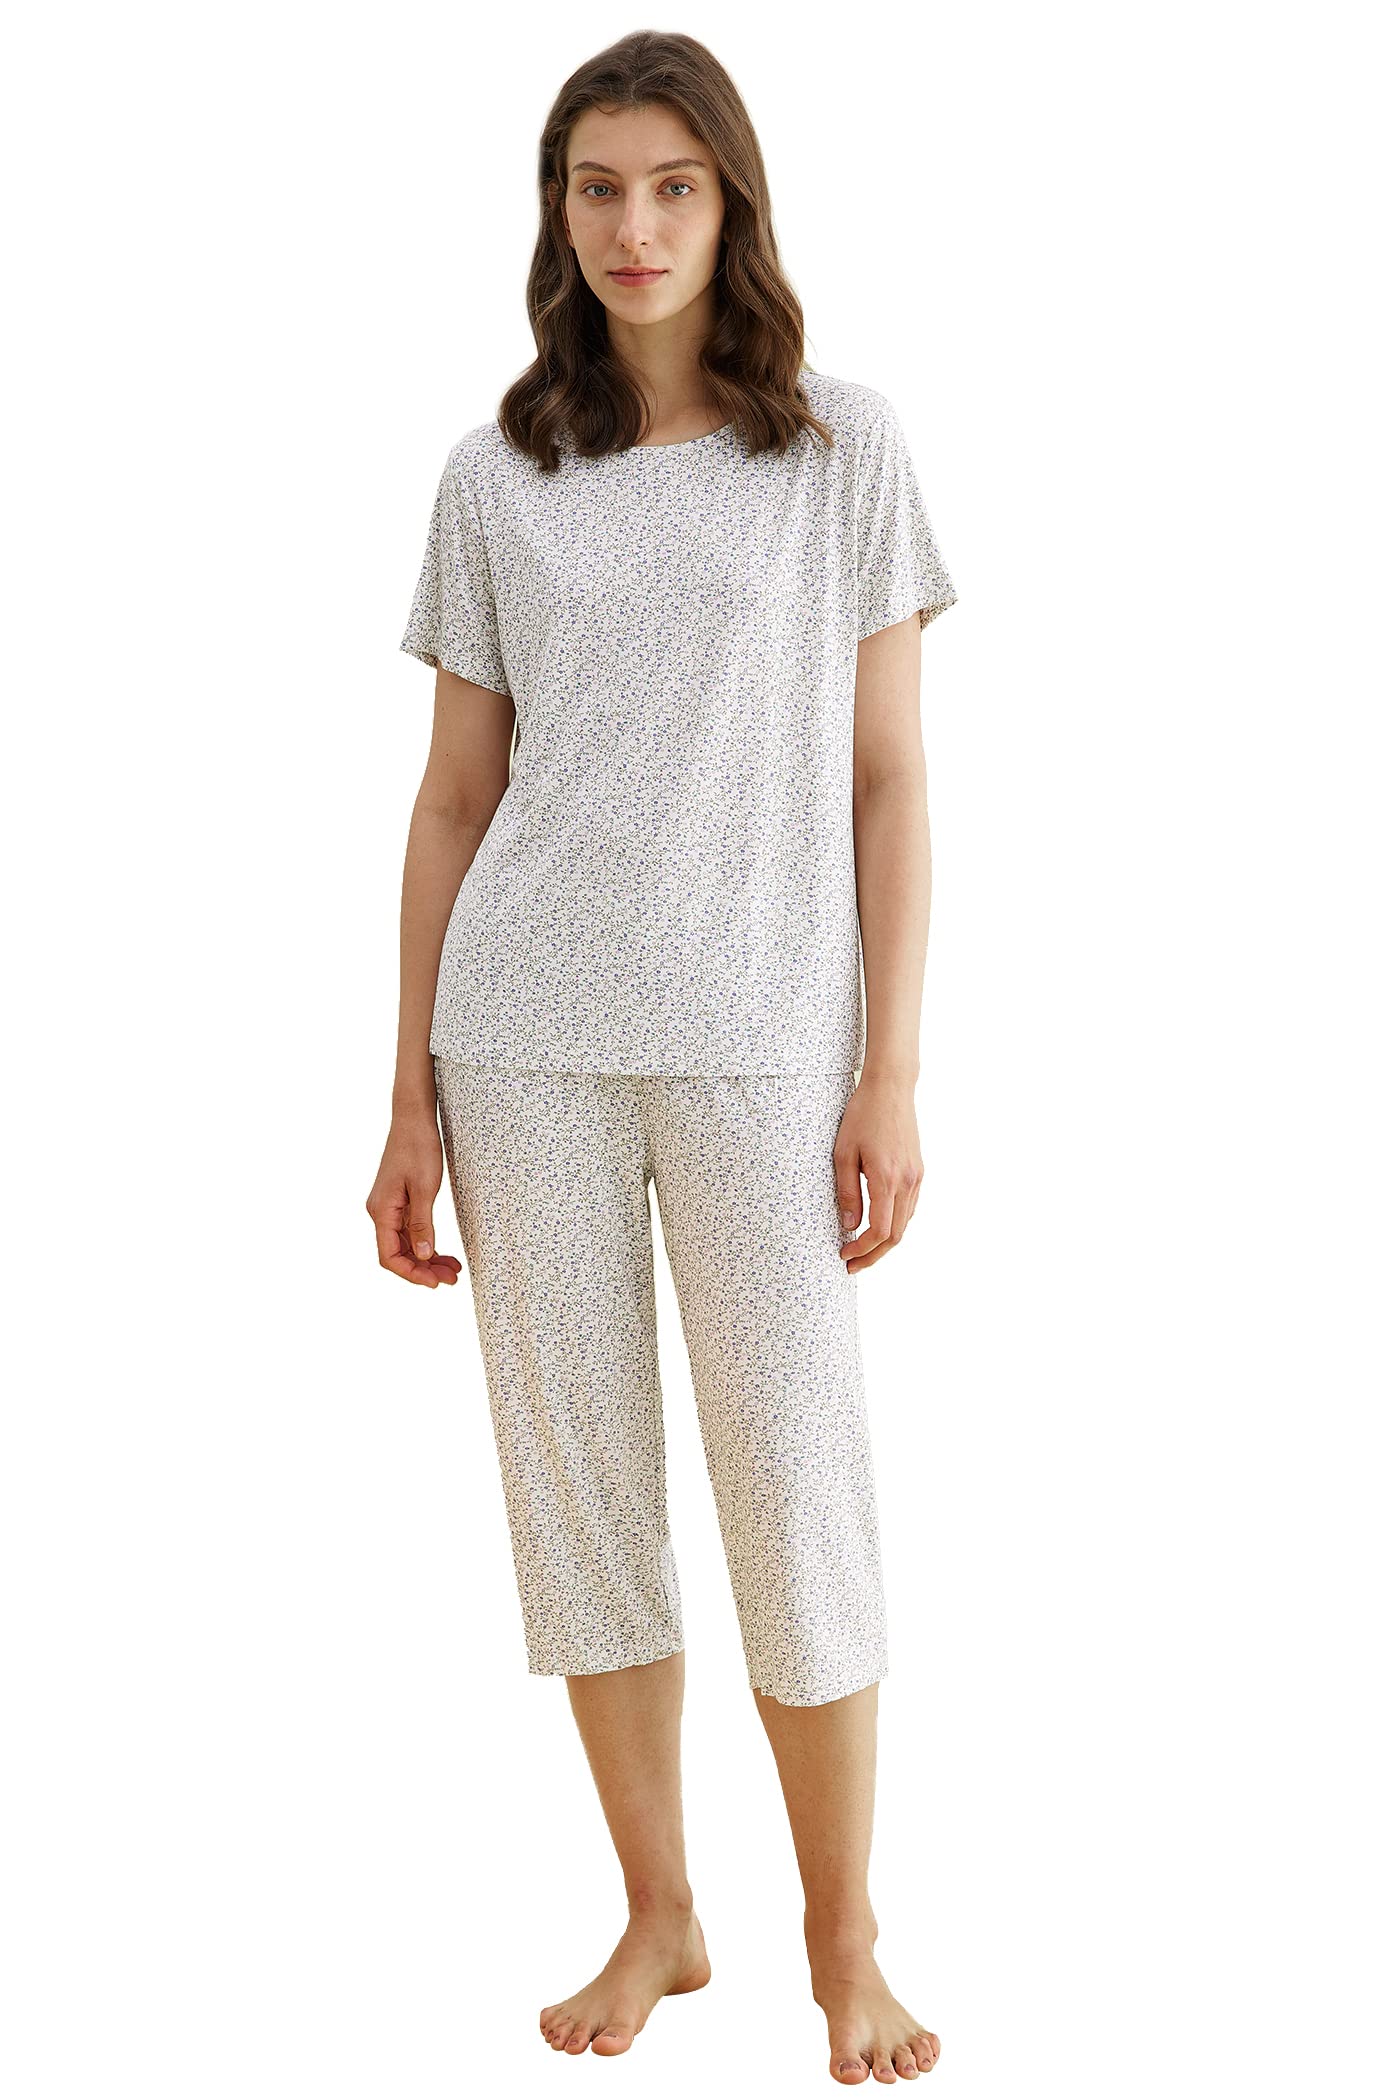 Latuza Women's Pleated Loungewear Top and Capris Pajamas Set in